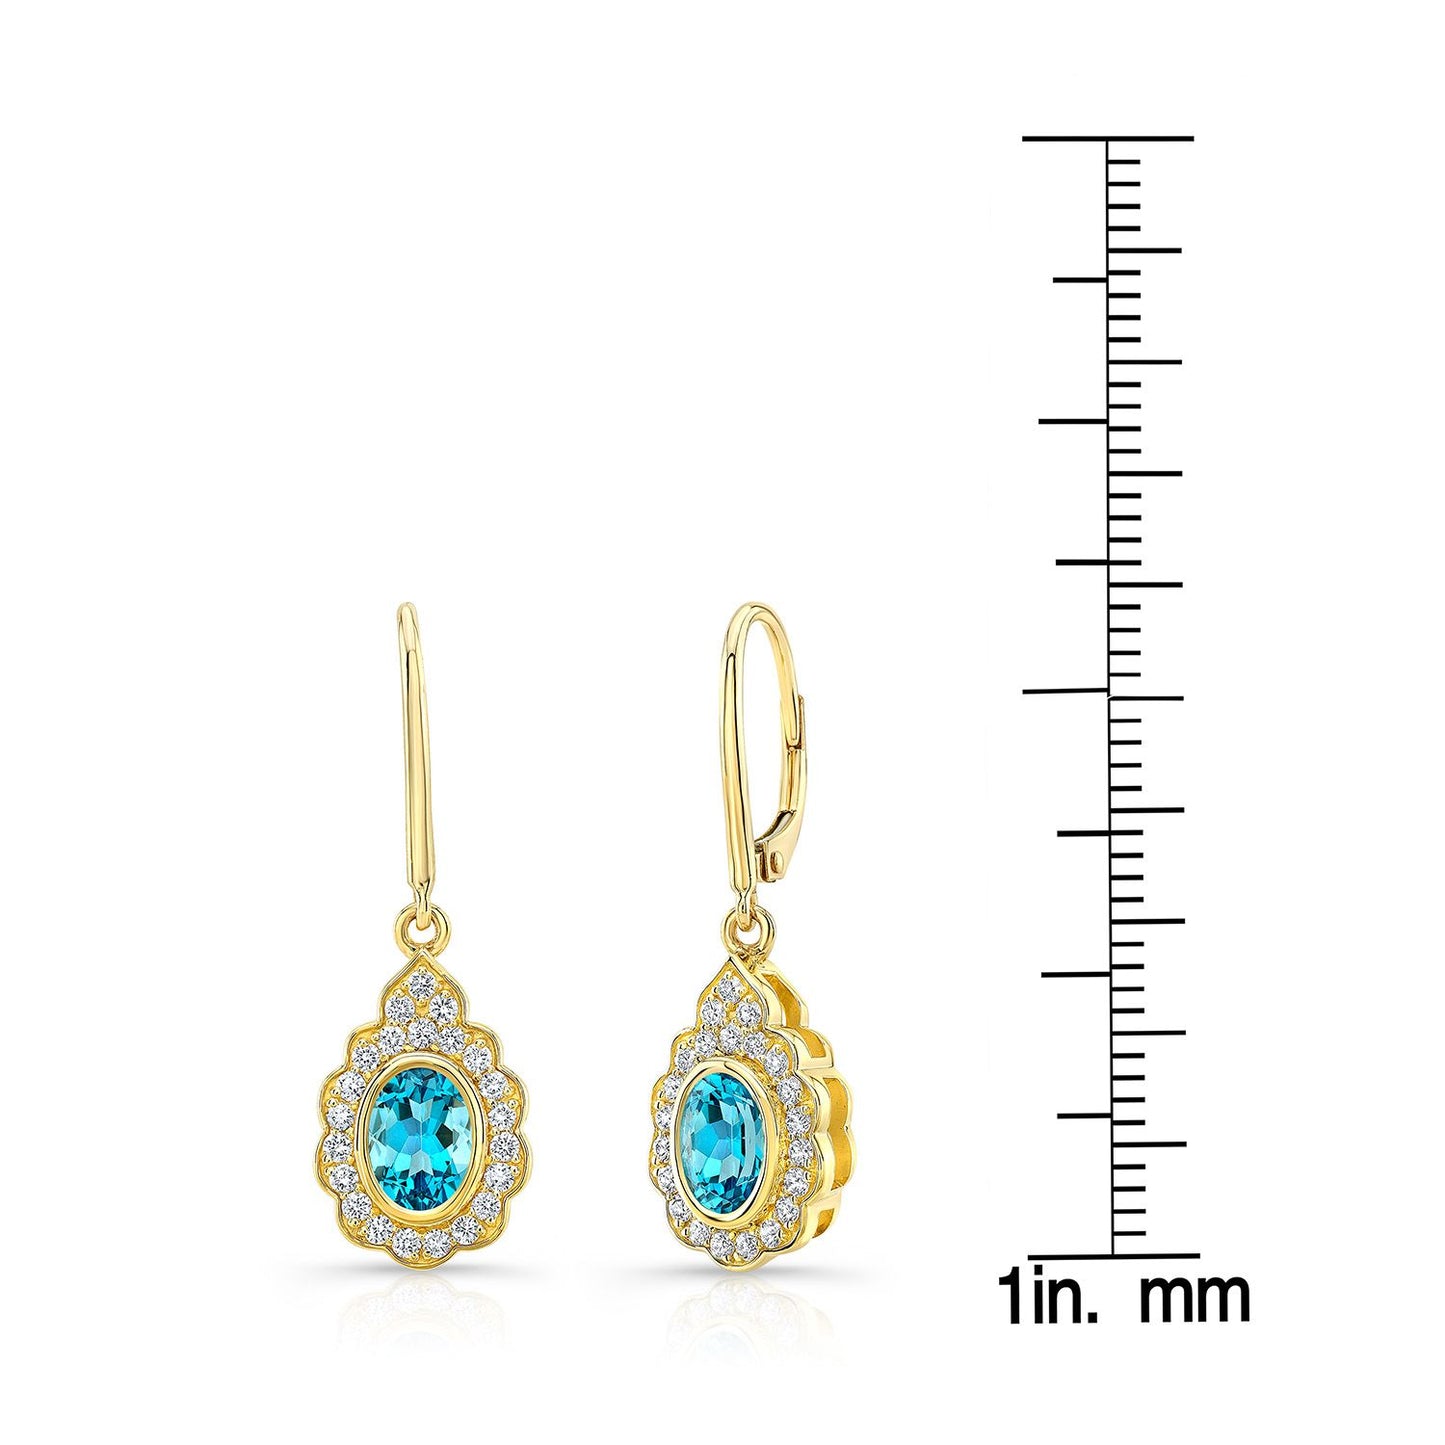 Blue Topaz And Diamond Oval Bezel Earrings With Teardrop Scallop Frame In 14k Yellow Gold (7x5mm)